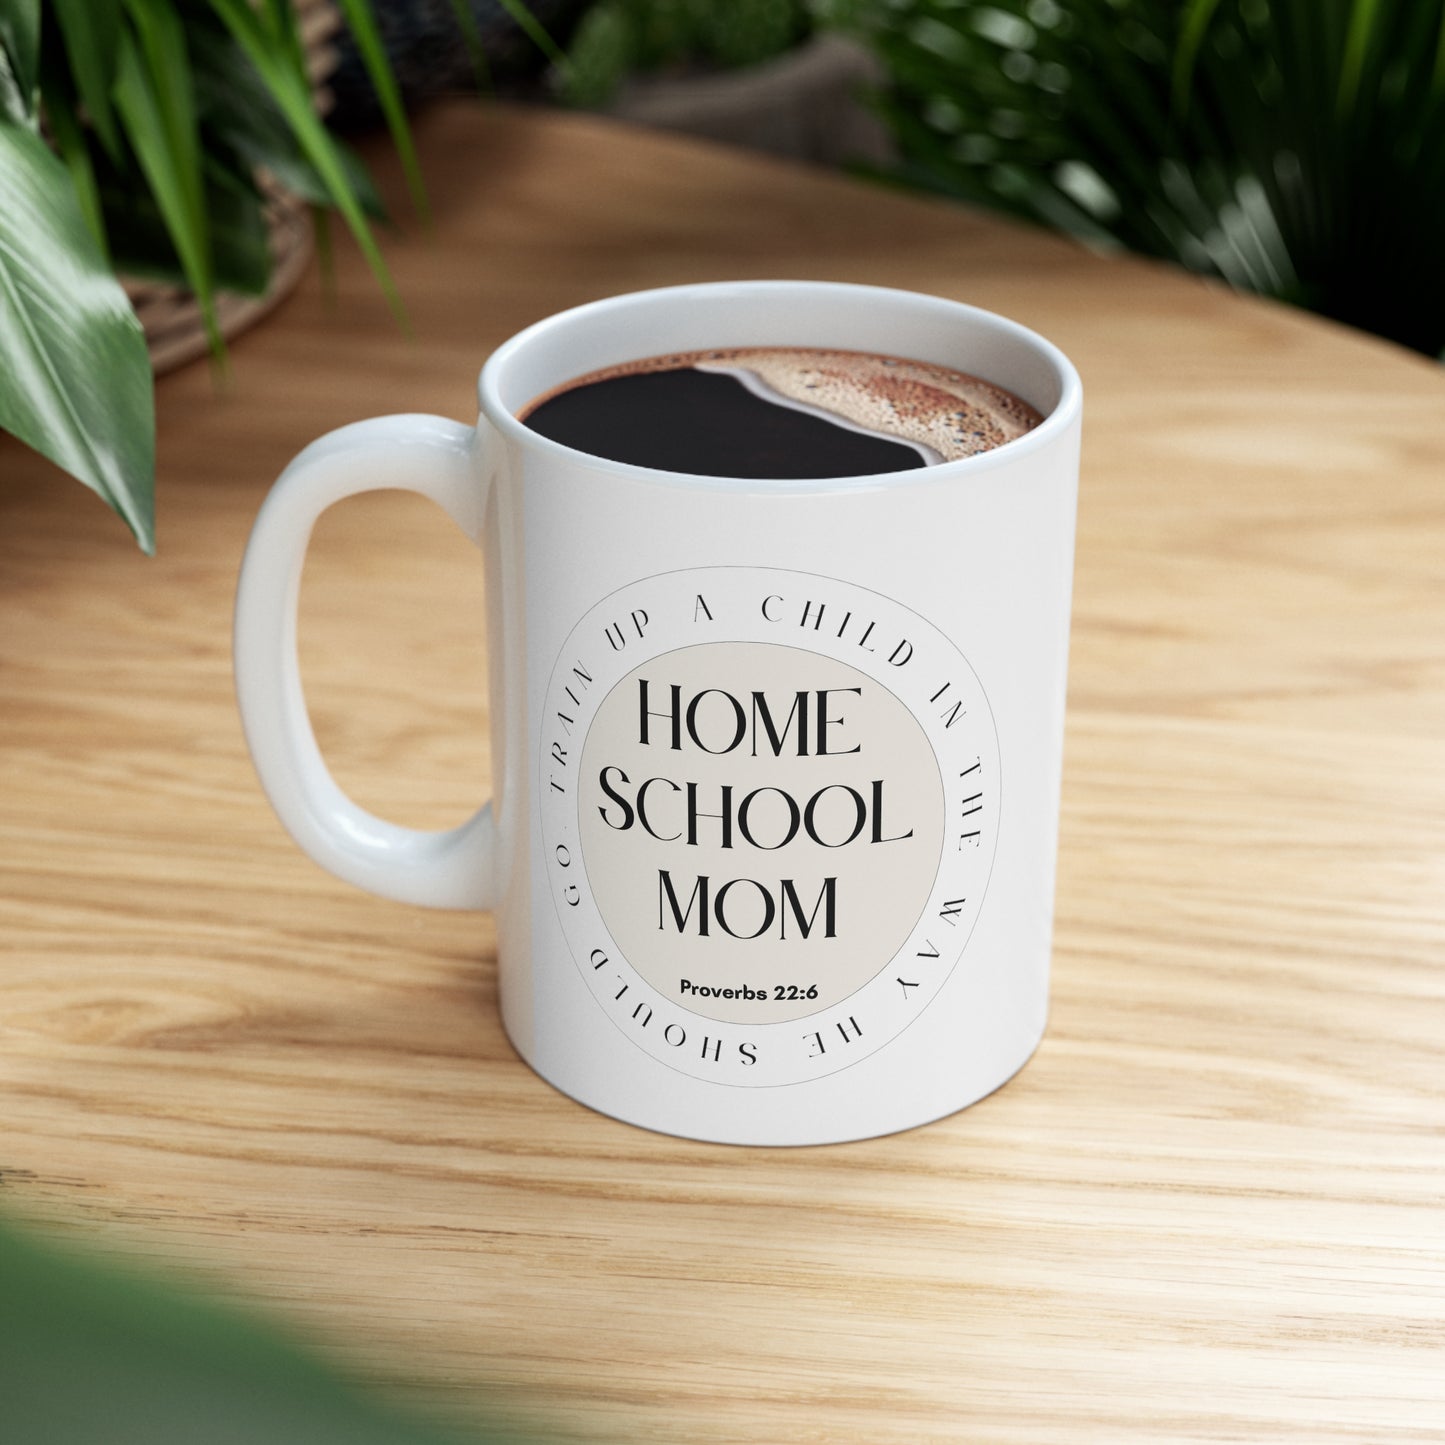 Home School Mom Gift Mug, Train Up A Child, Proverbs 22:6